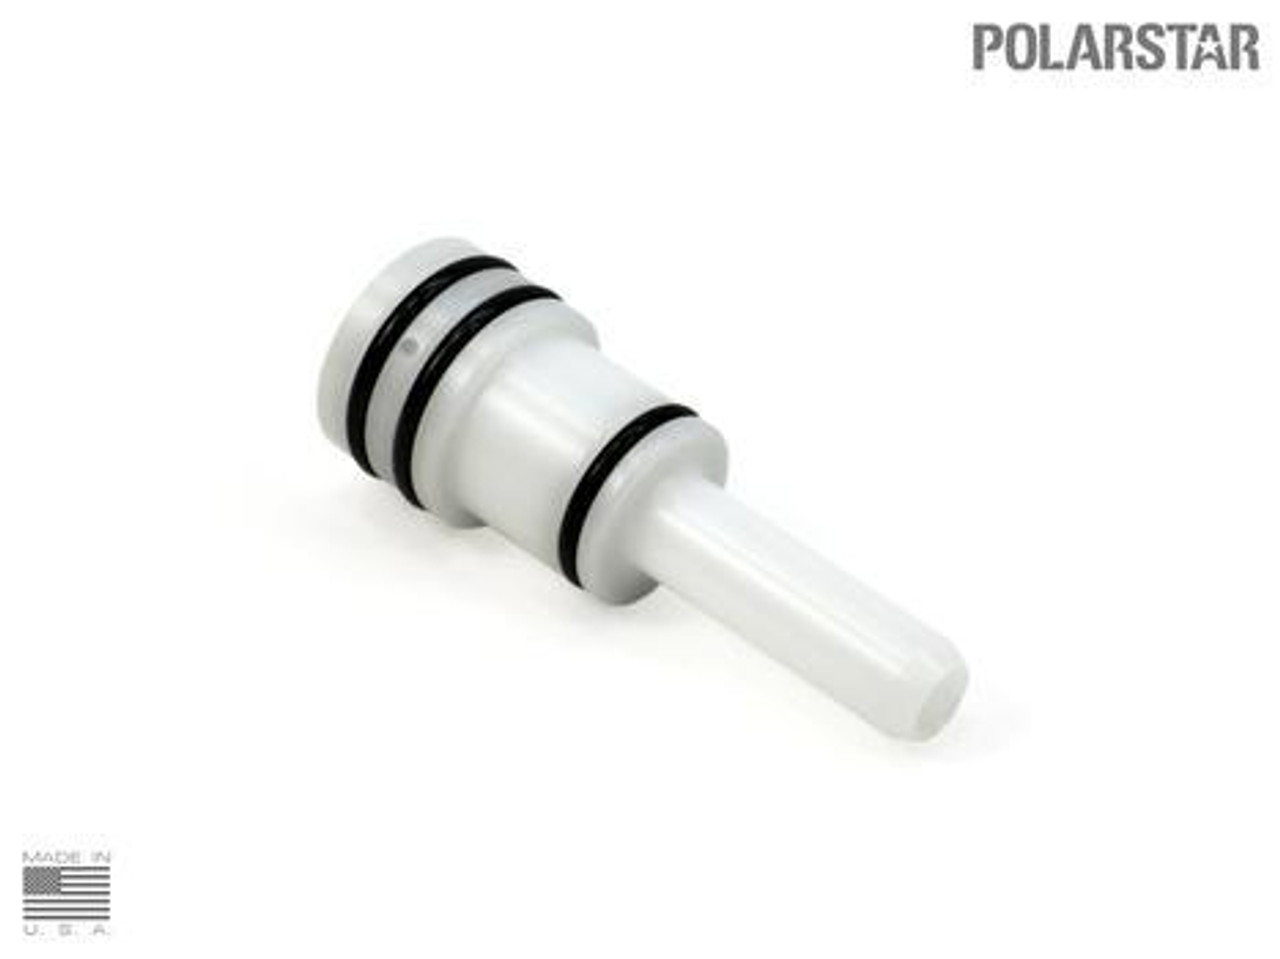 Polarstar F1 Nozzle #10 (EF ARX160 ELITE)